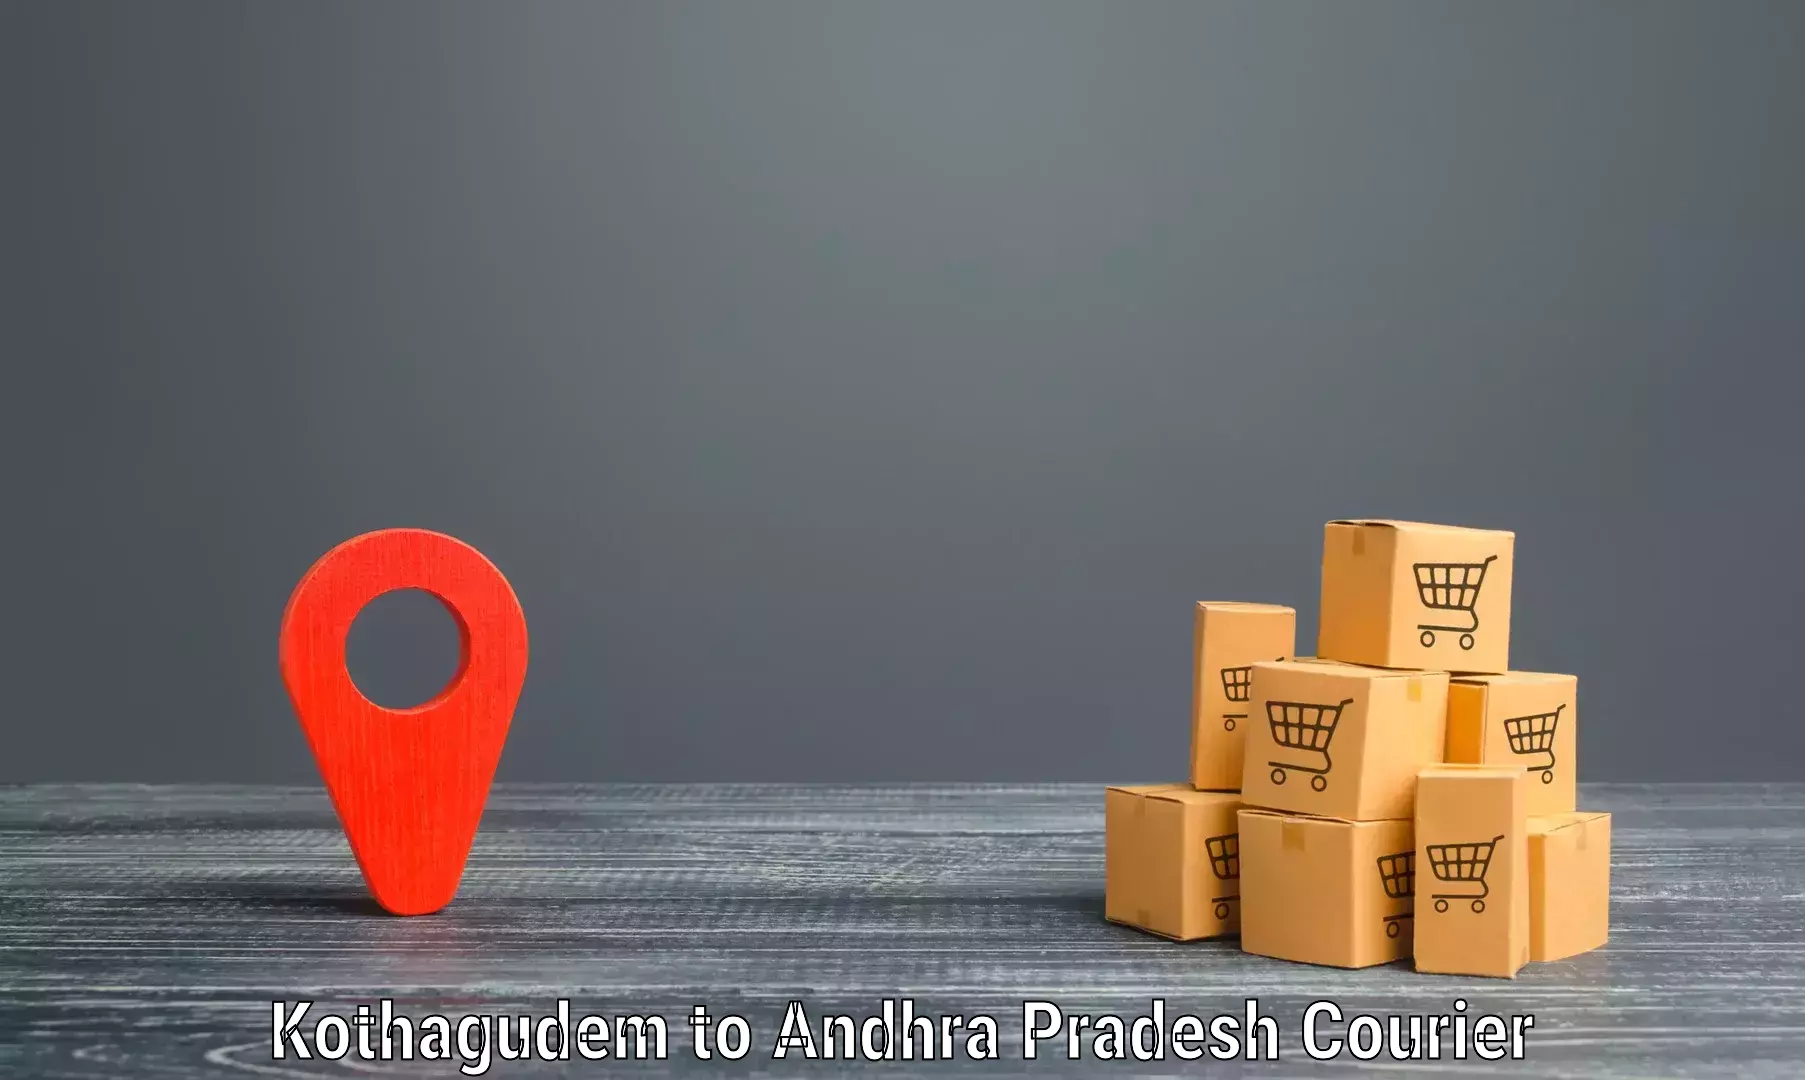 Lightweight parcel options Kothagudem to Yerravaram